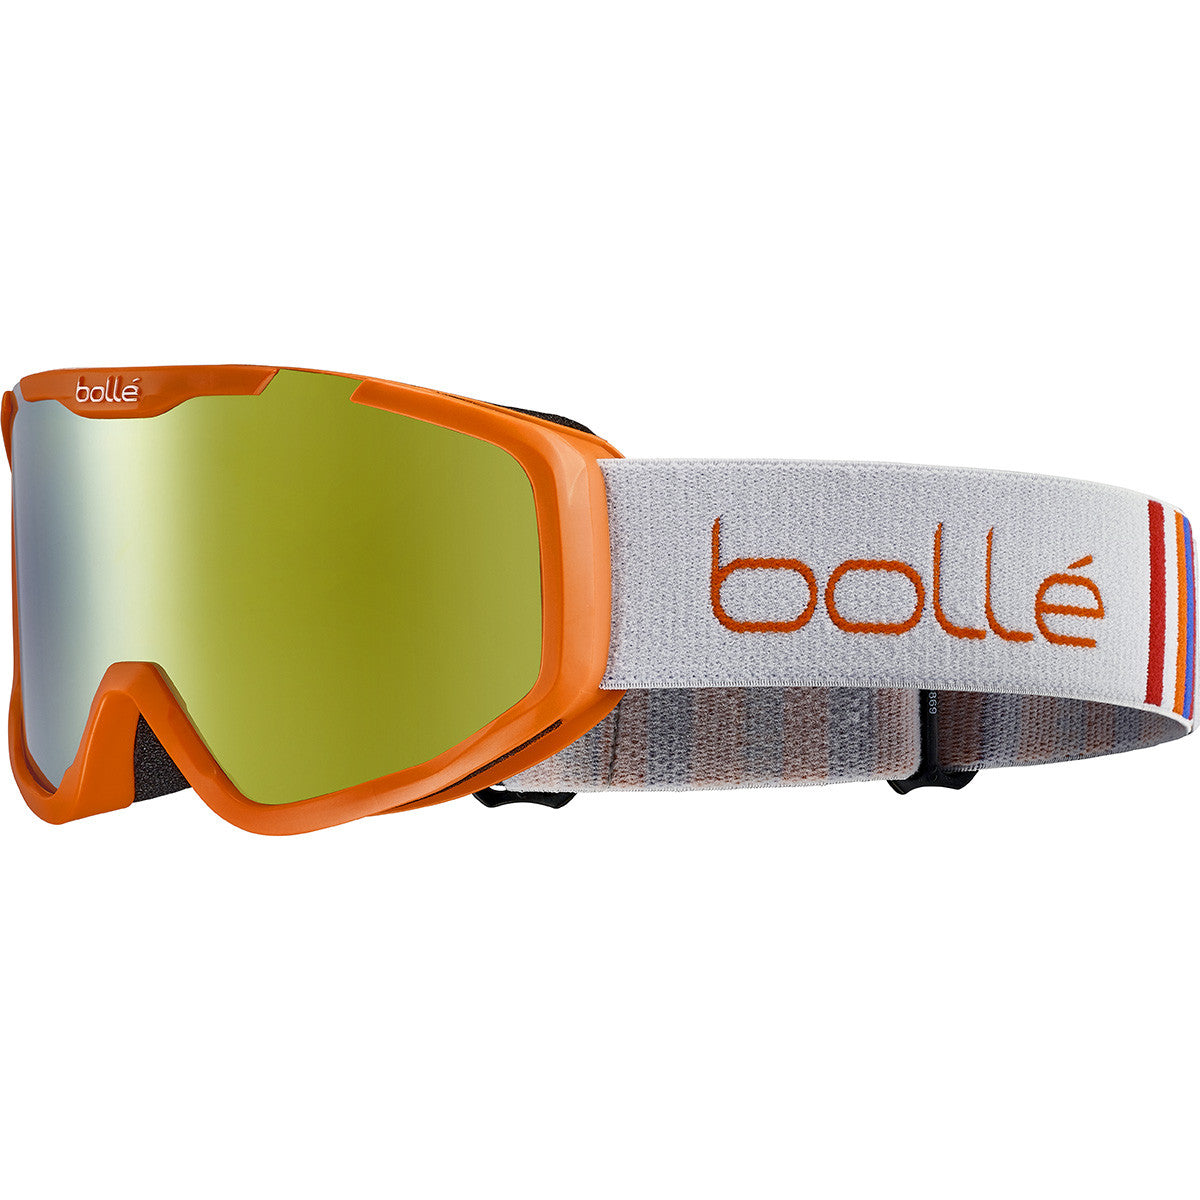 Bolle Rocket Plus Goggles  Orange Matte Small One size